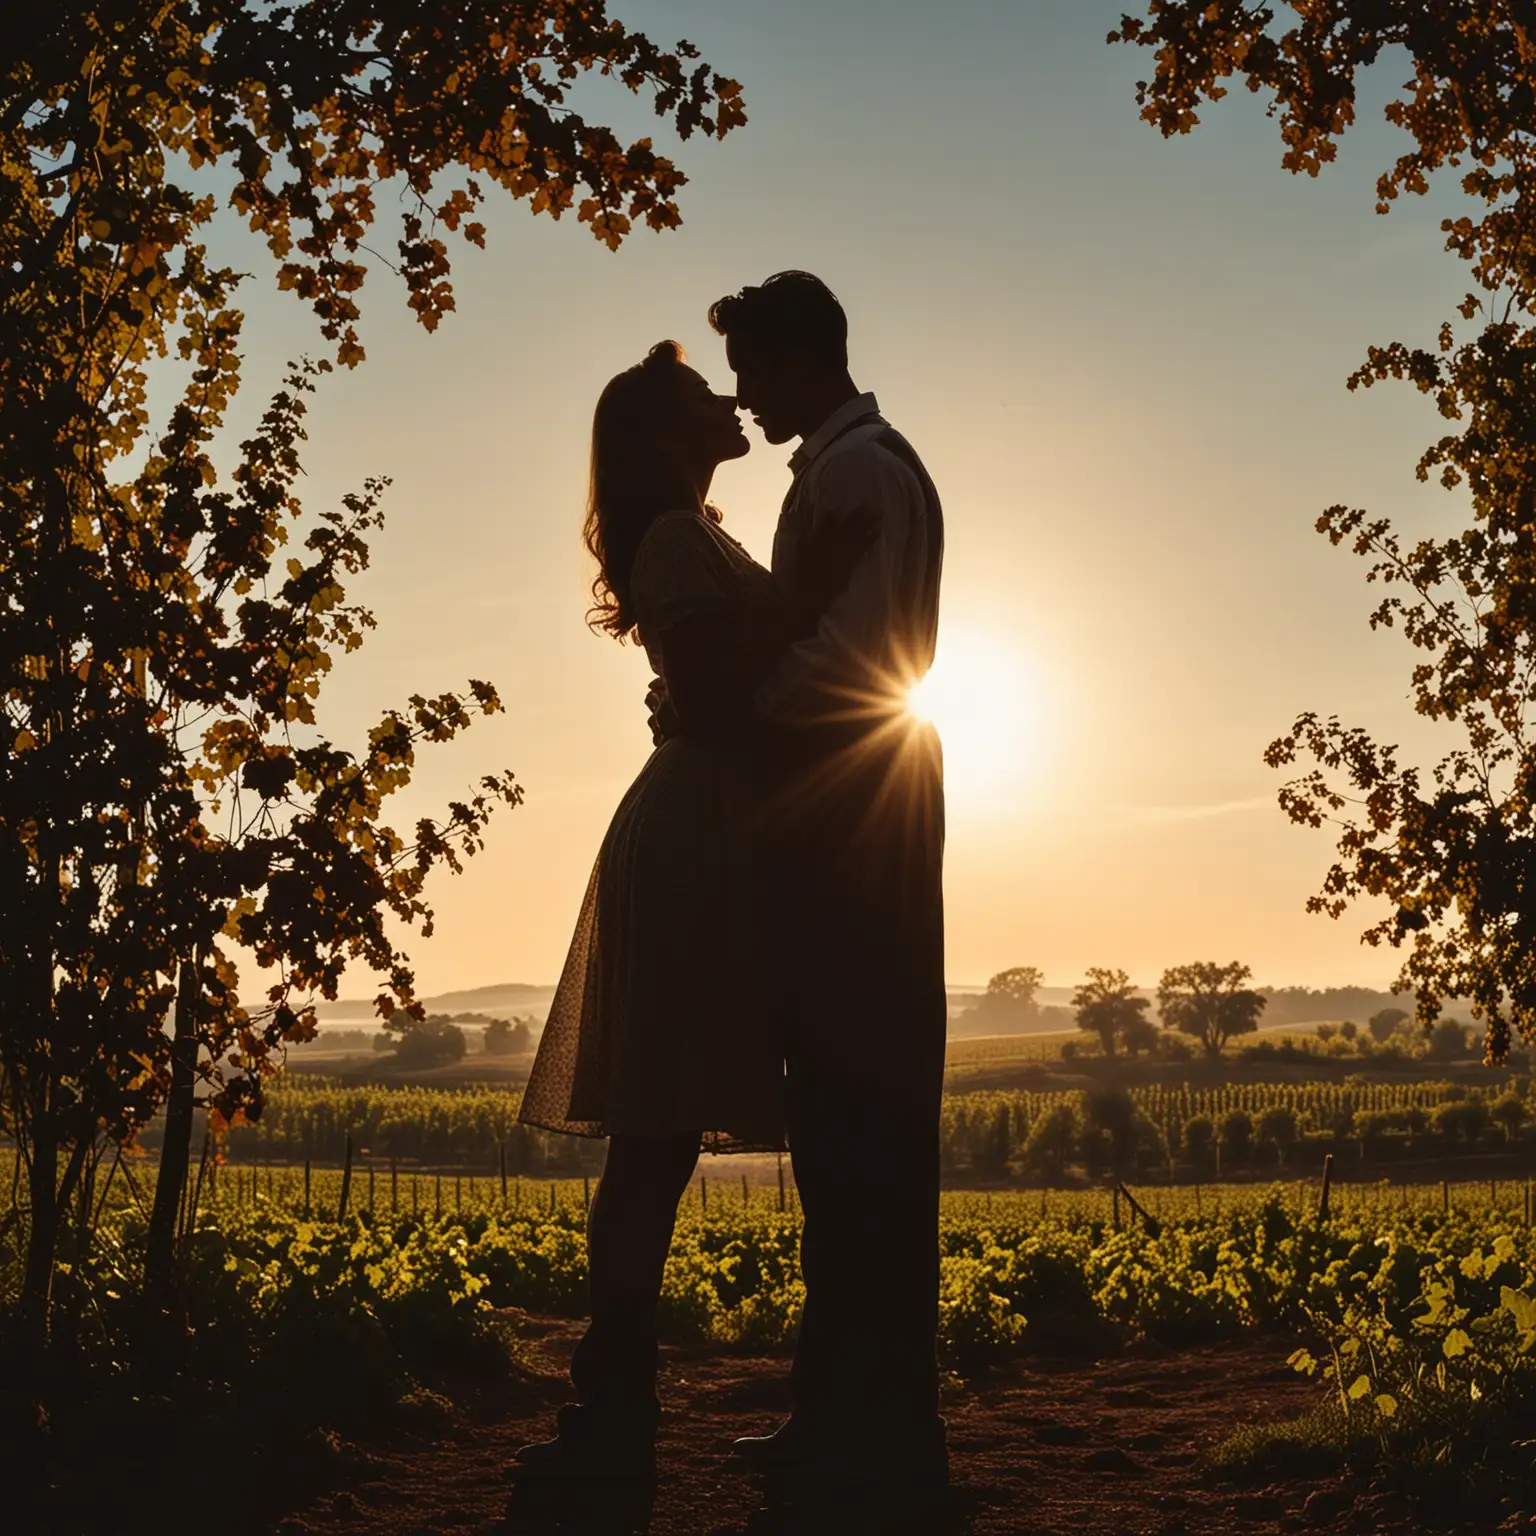 1940s Couple Silhouette Kissing in Romantic Vineyard Setting